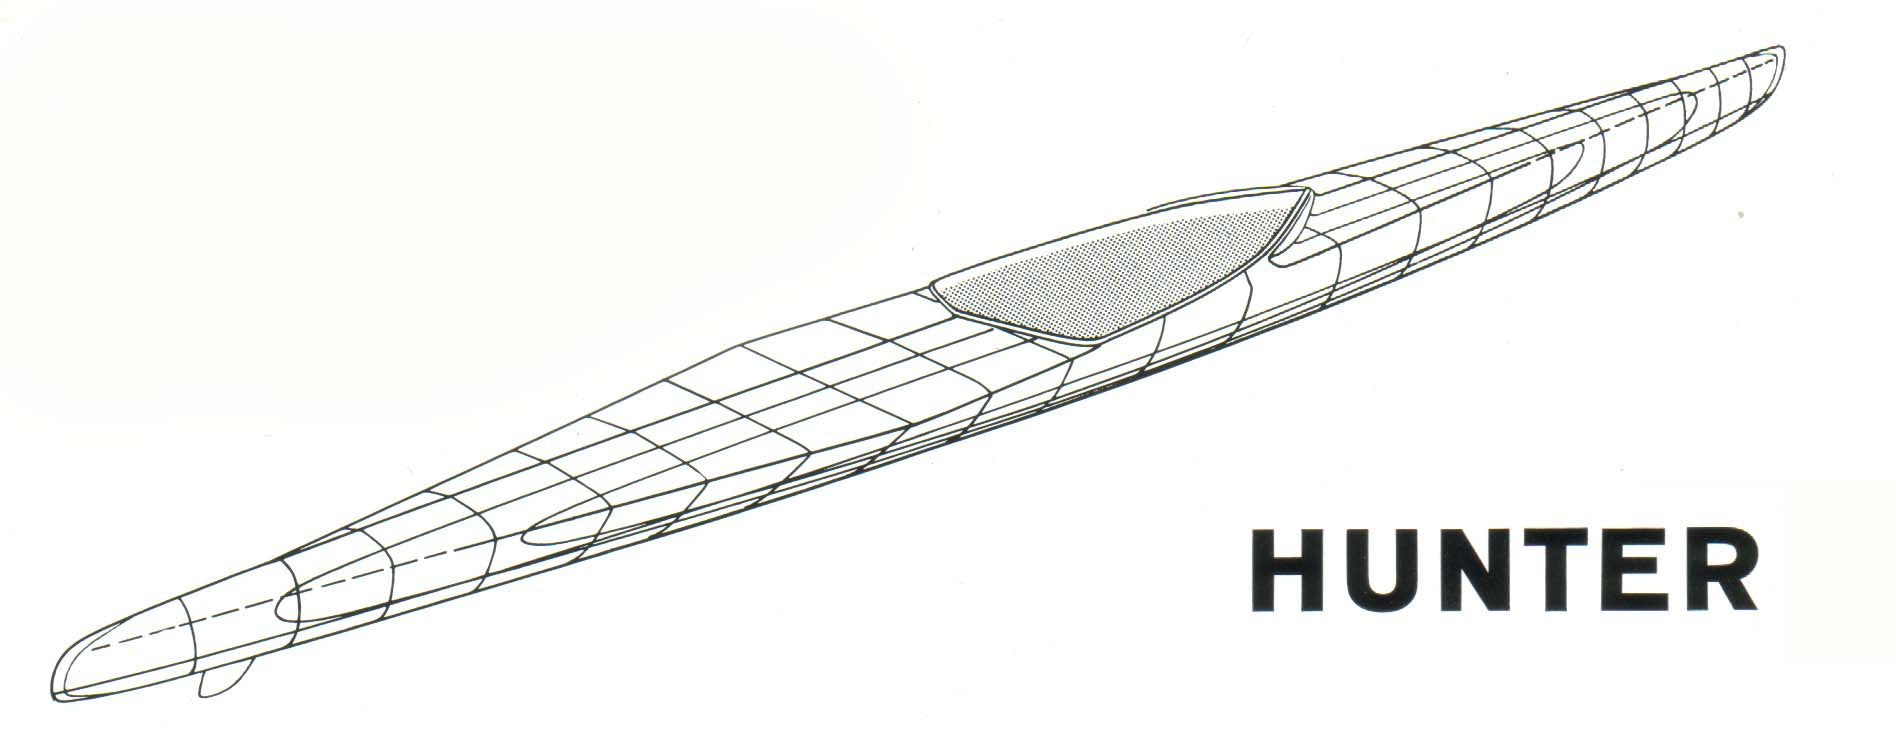 K1 Racing - Hunter (1965 - 1968) Struer A/S